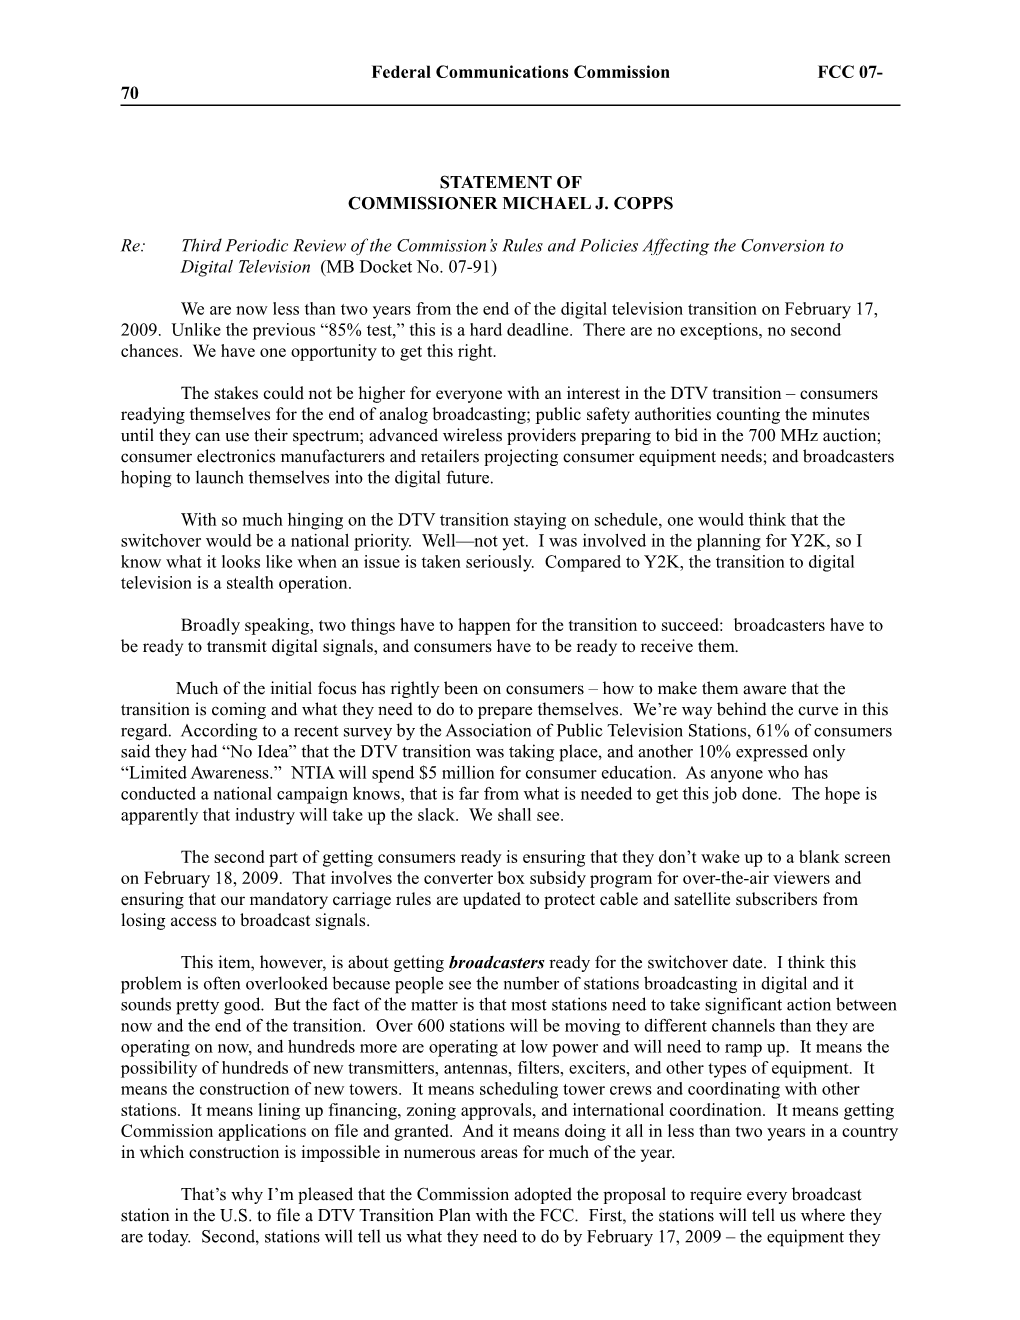 Federal Communications Commission FCC 07-70